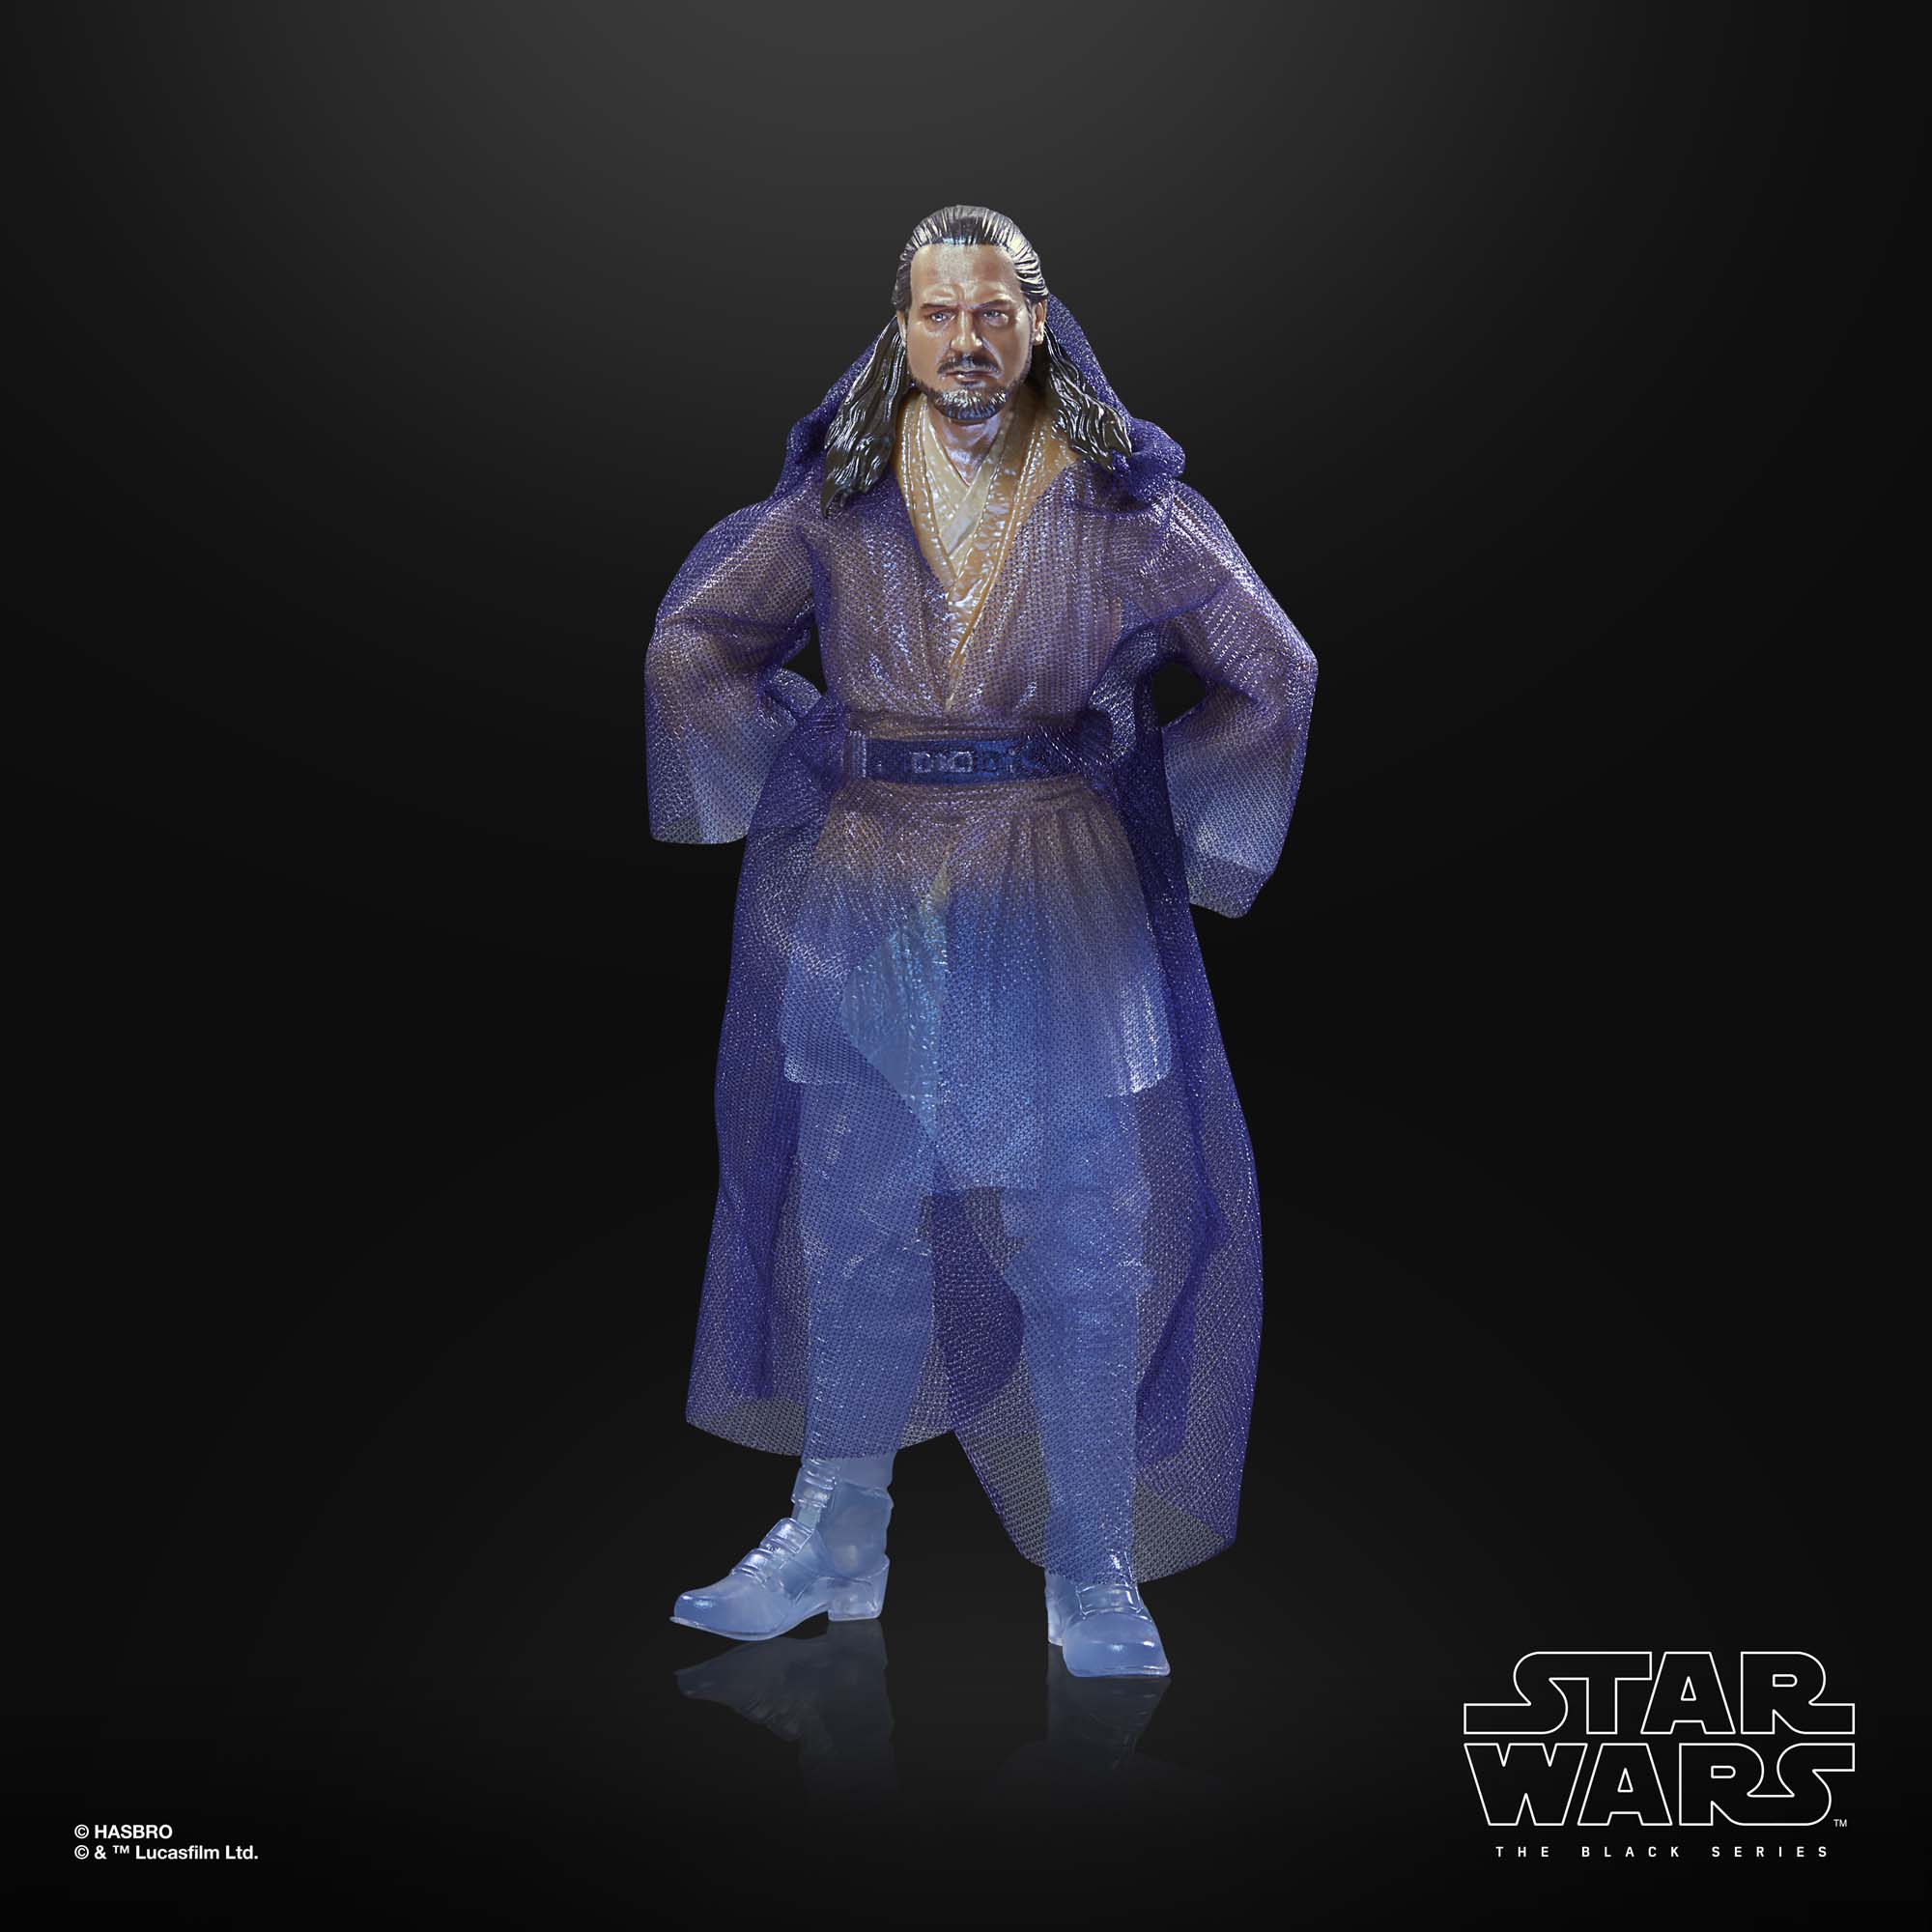 Star Wars Black Series: New Obi-Wan Kenobi and Qui-Gon Jinn figures revealed